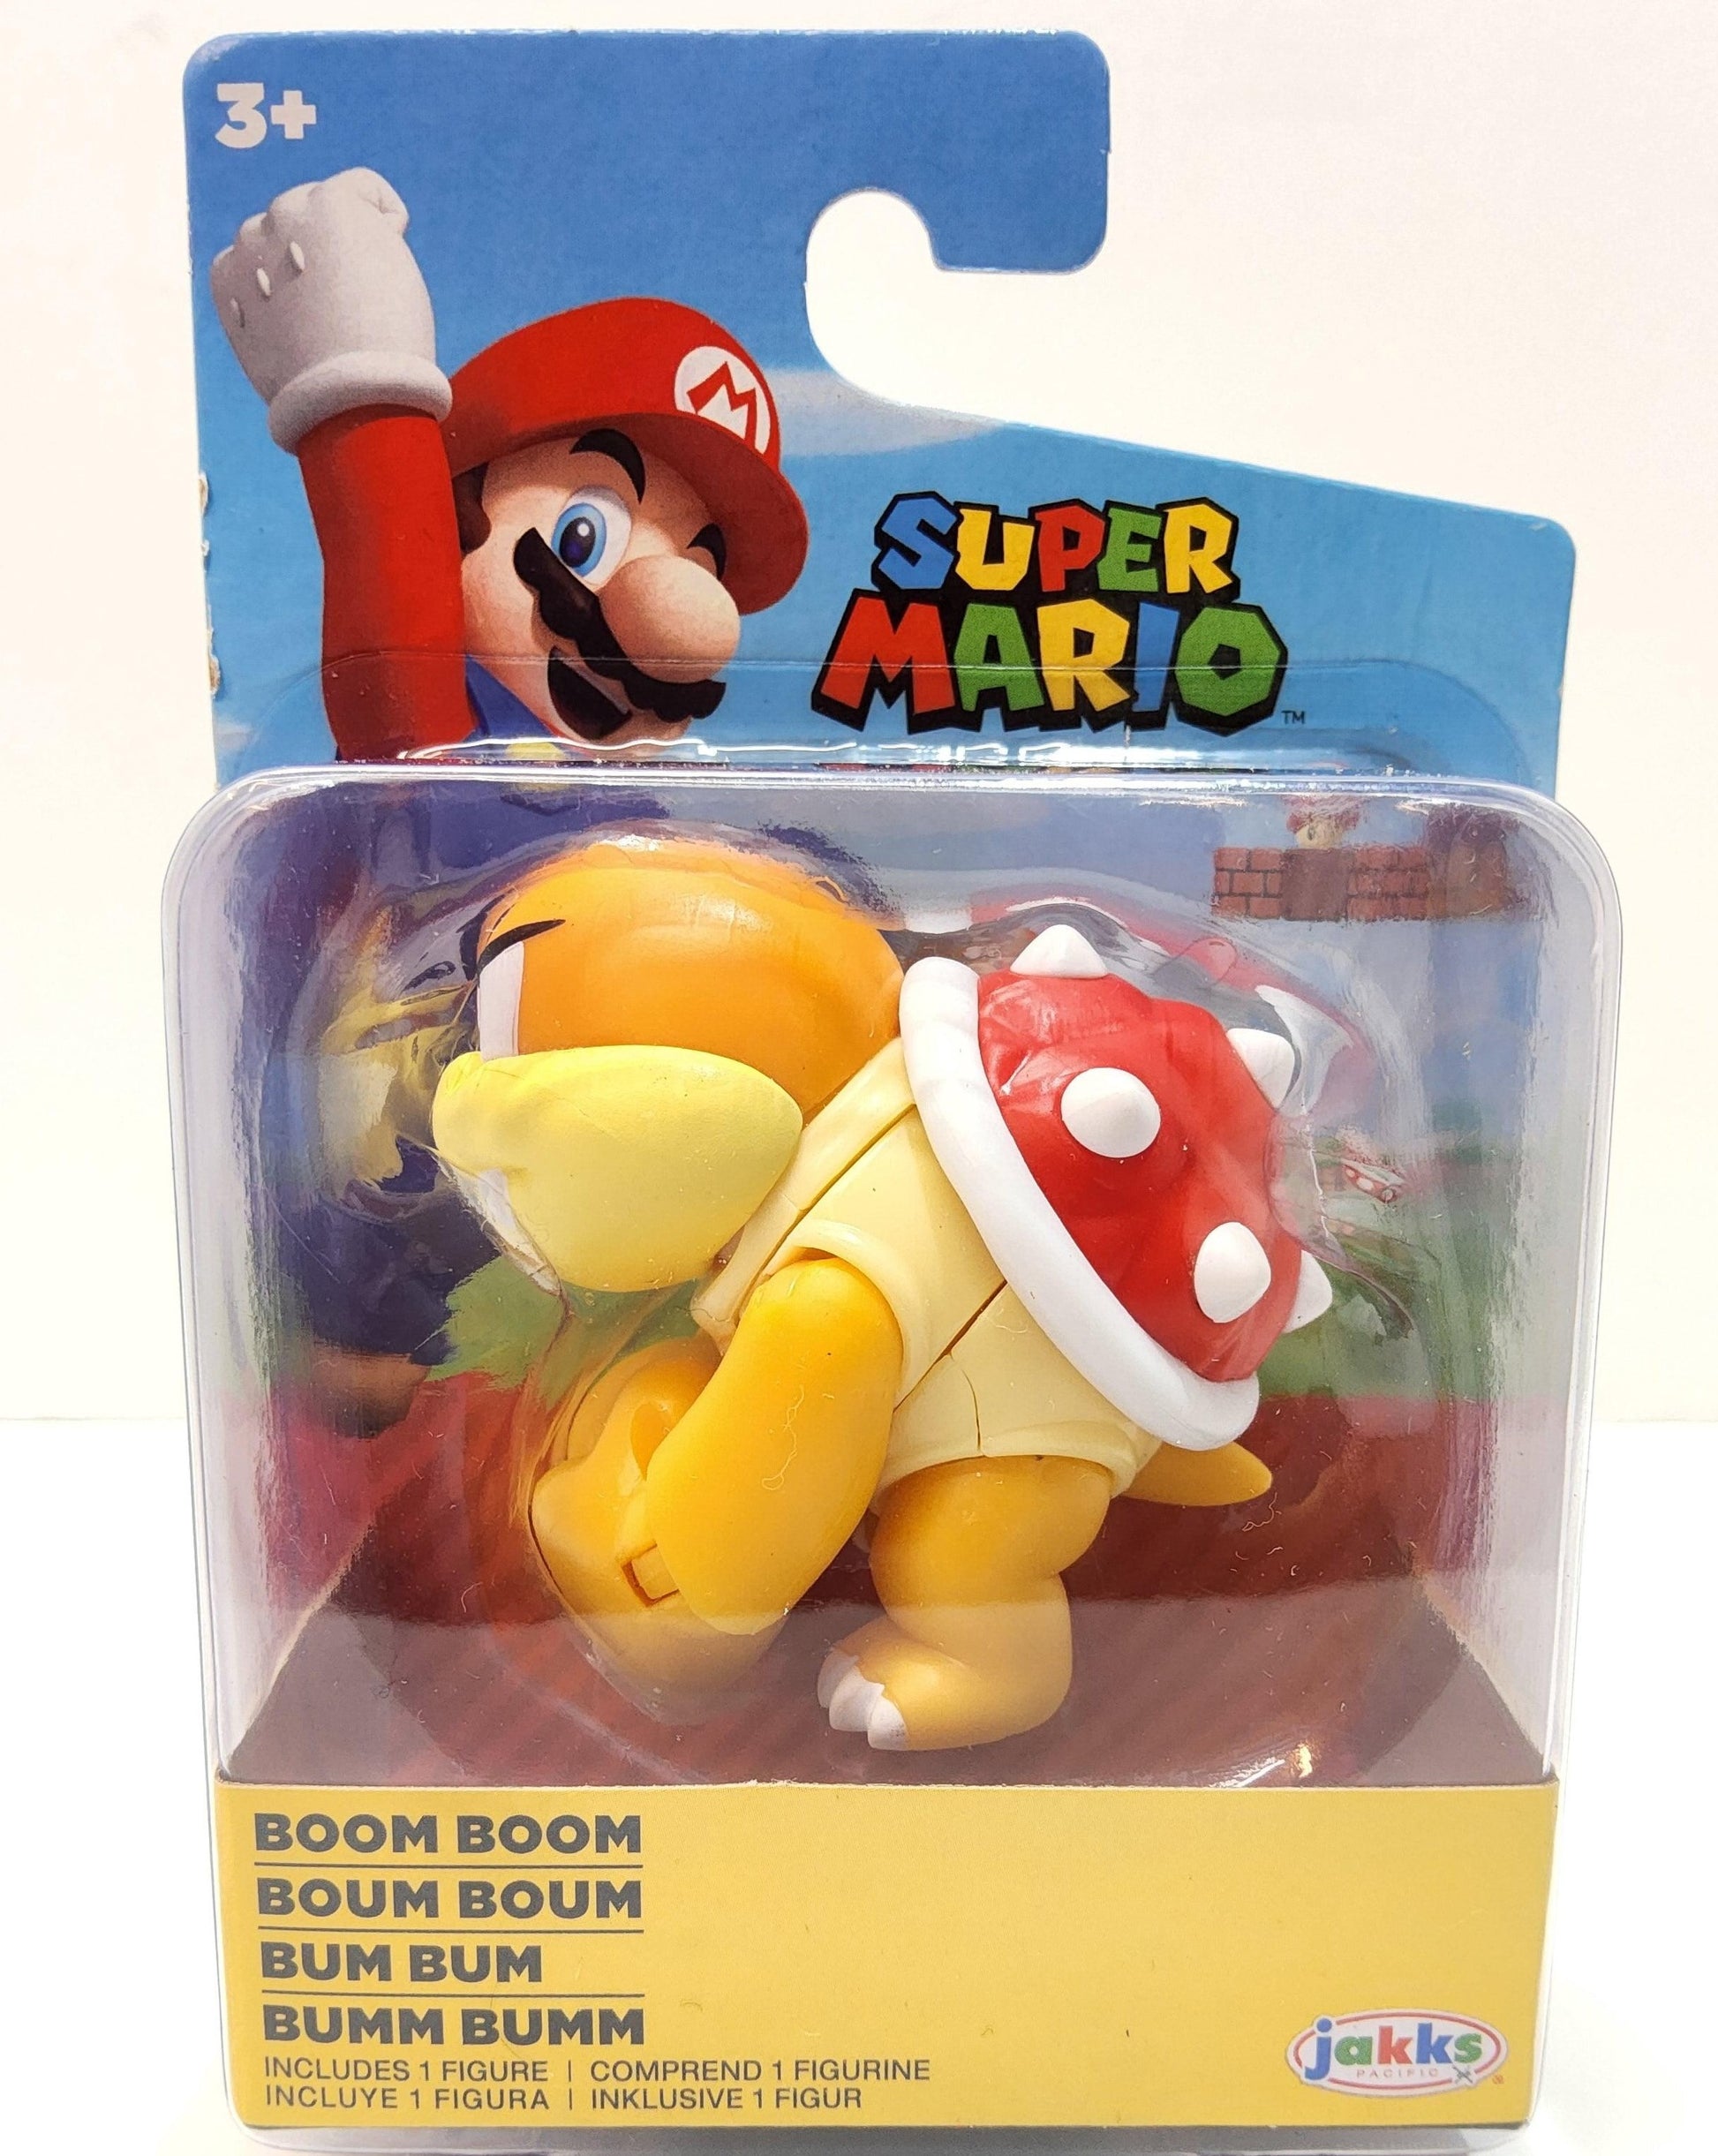 Unleash the Adventure with Jakks Pacific Super Mario Bros Boom Boom 2.5" Koopaling Action Figure! - Logan's Toy Chest